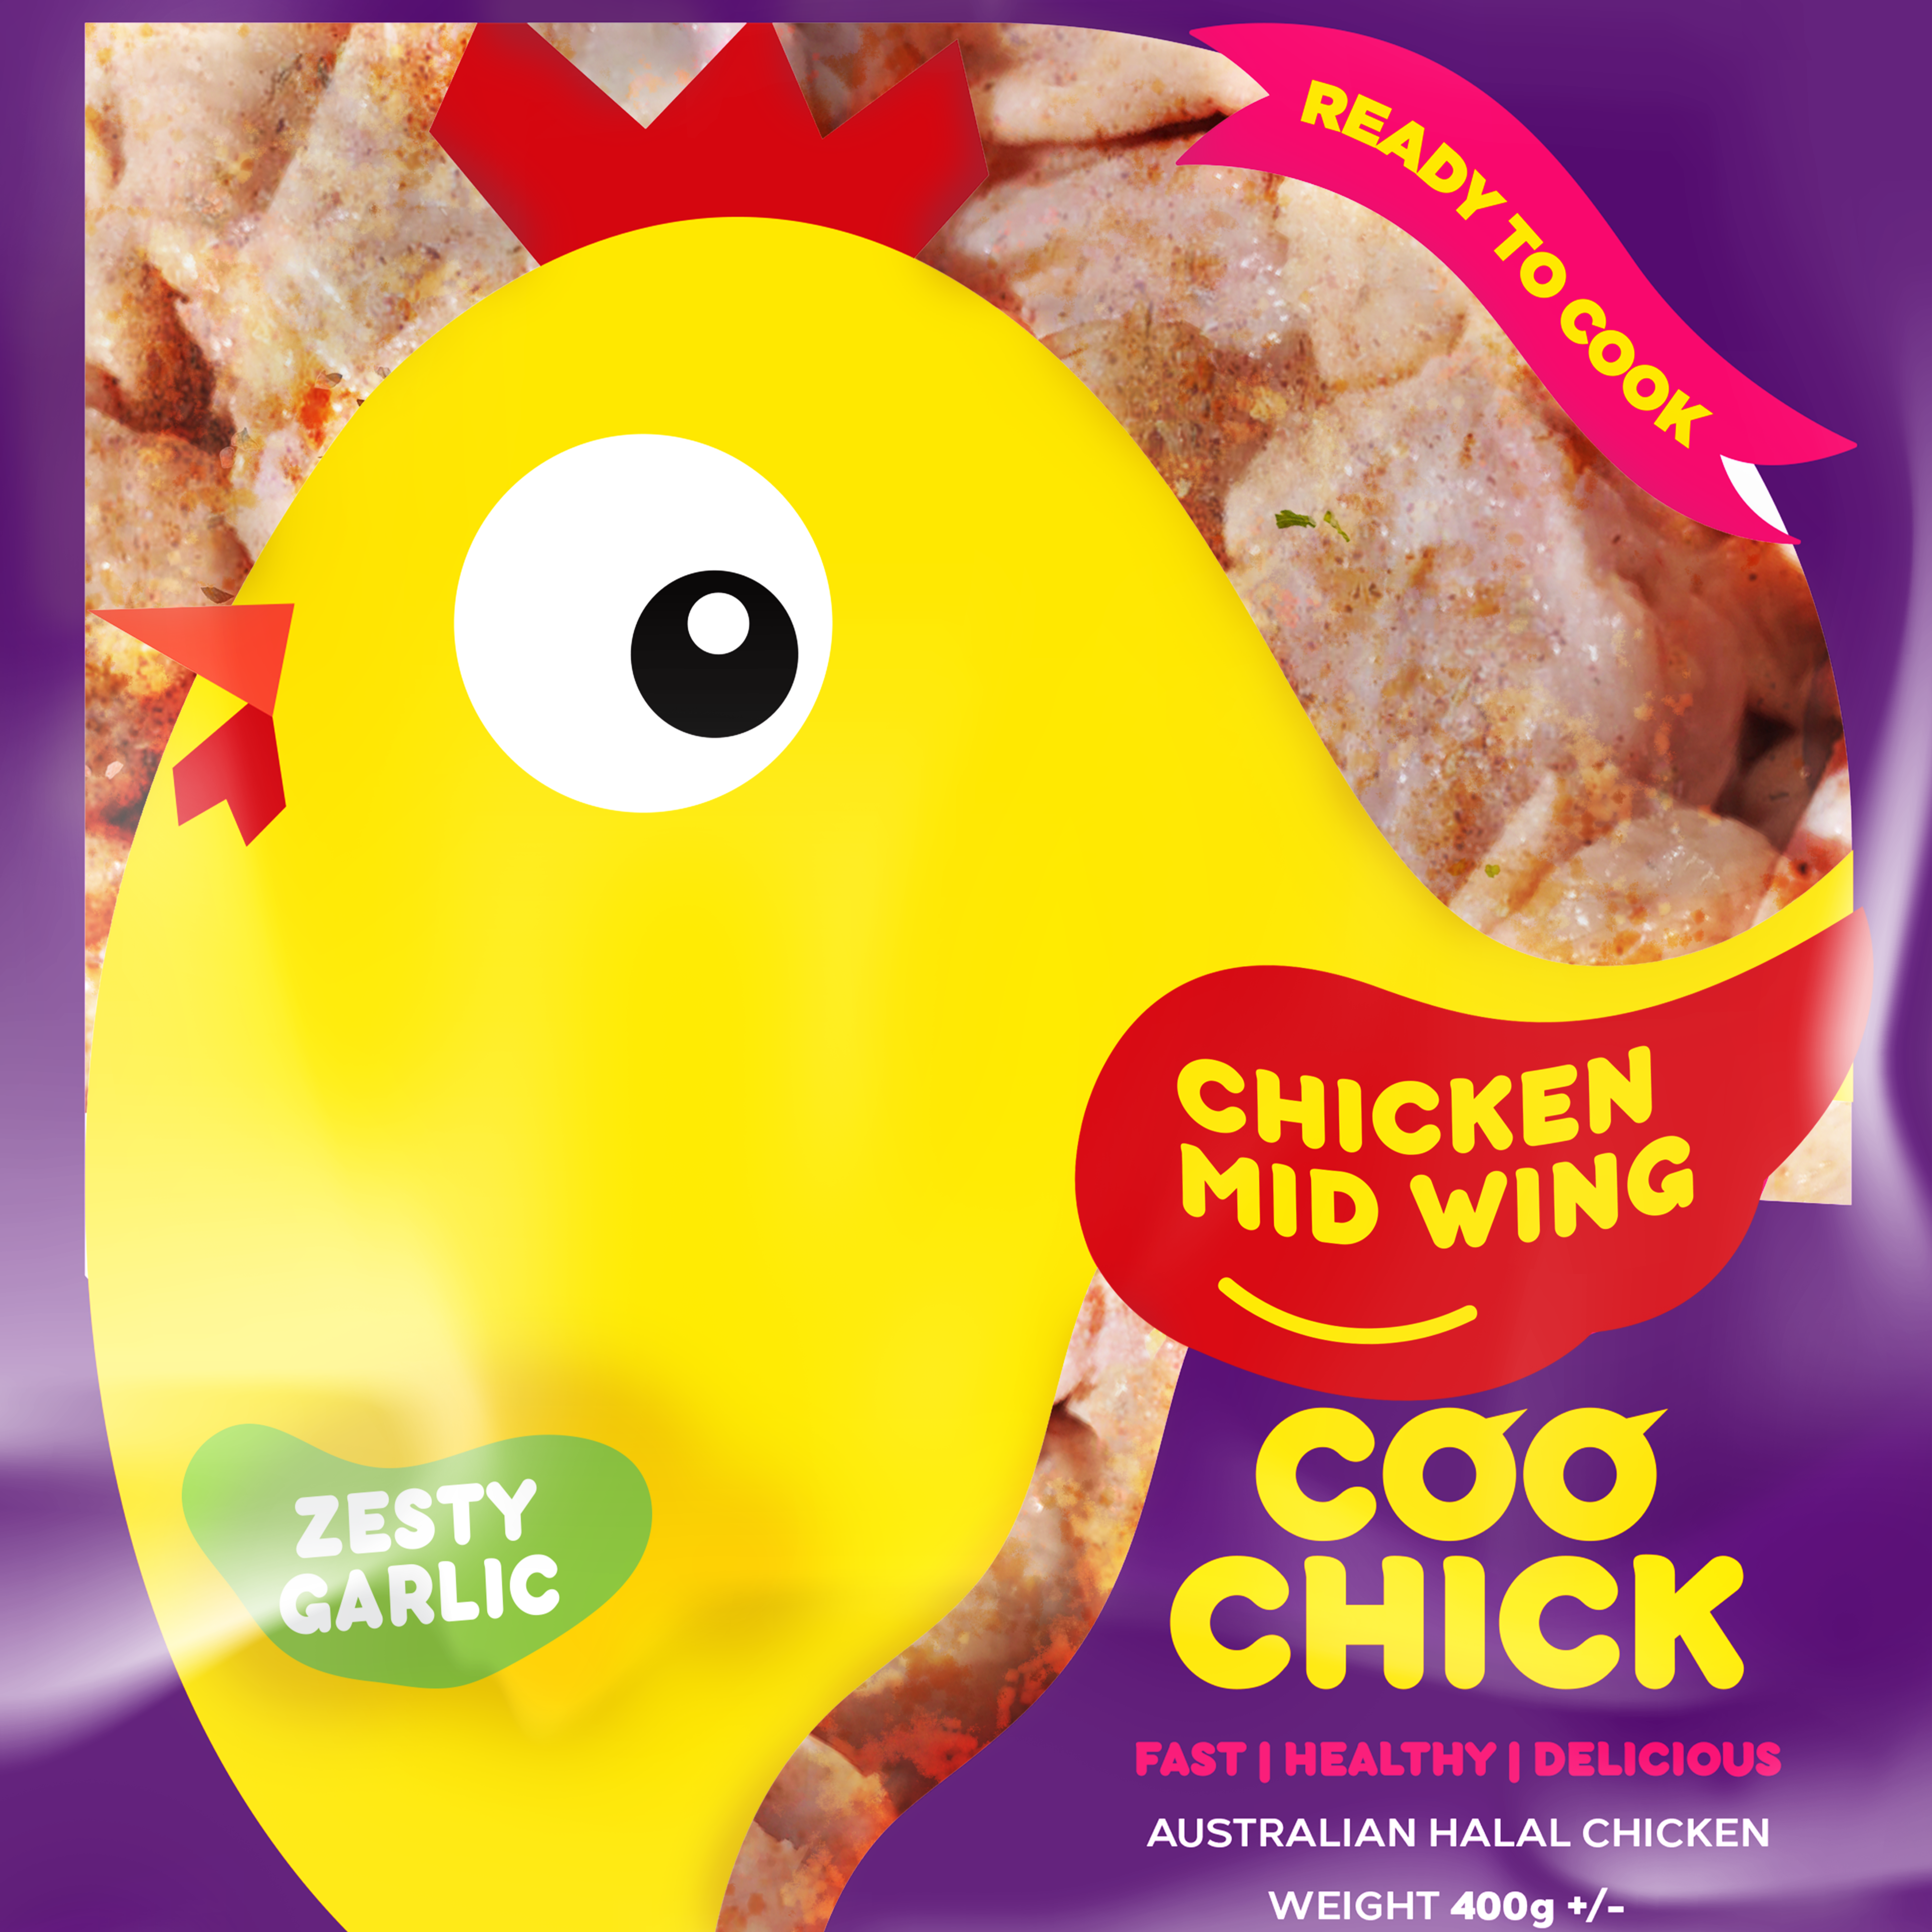 Zesty Garlic Chicken Mid-Wings